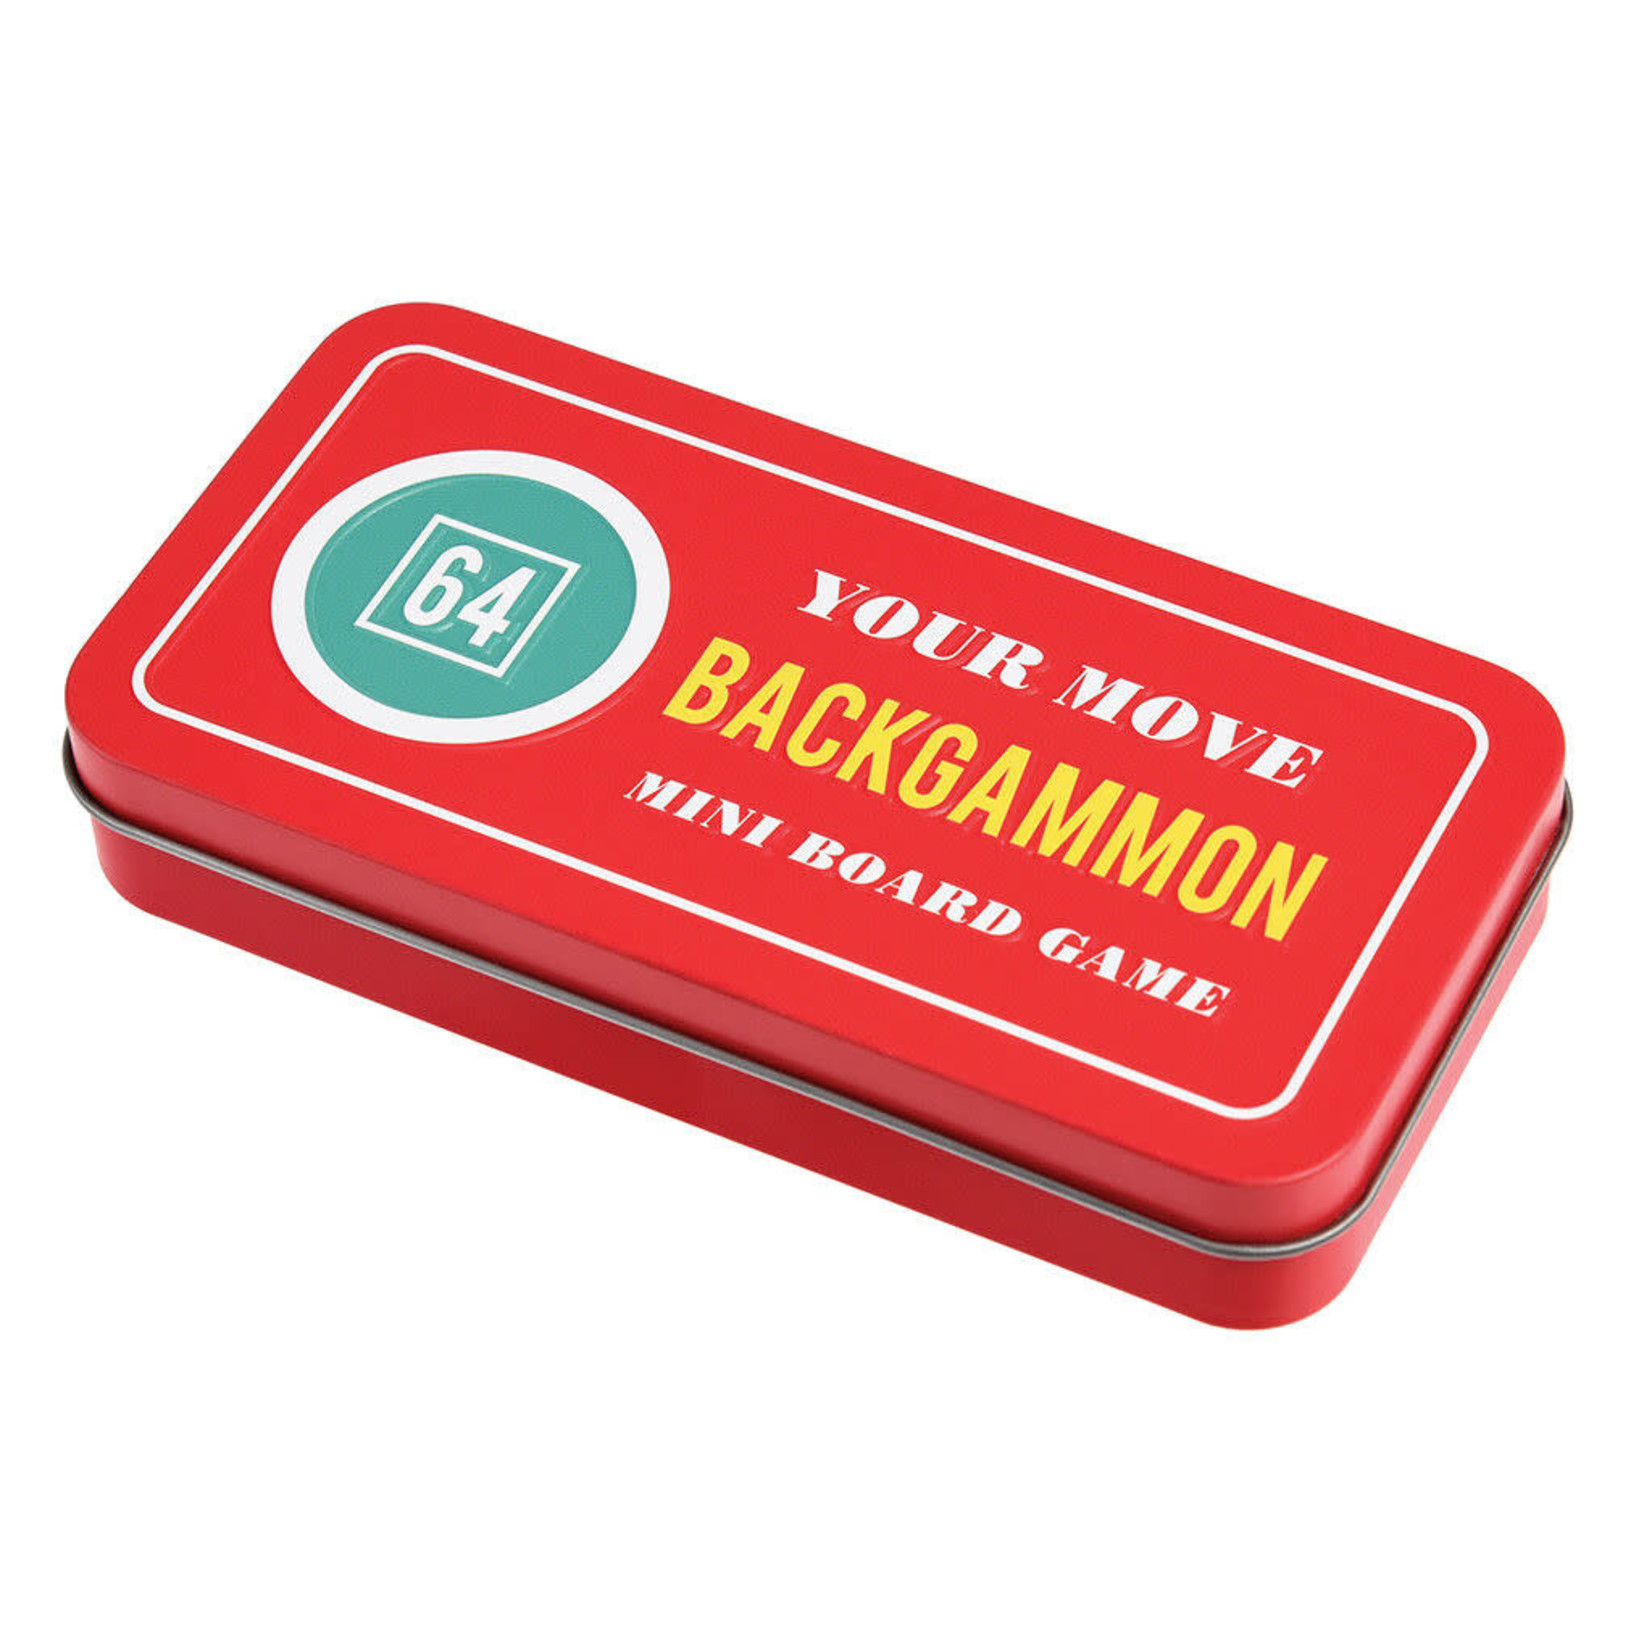 Rex London Backgammon Mini Board Game (CG)